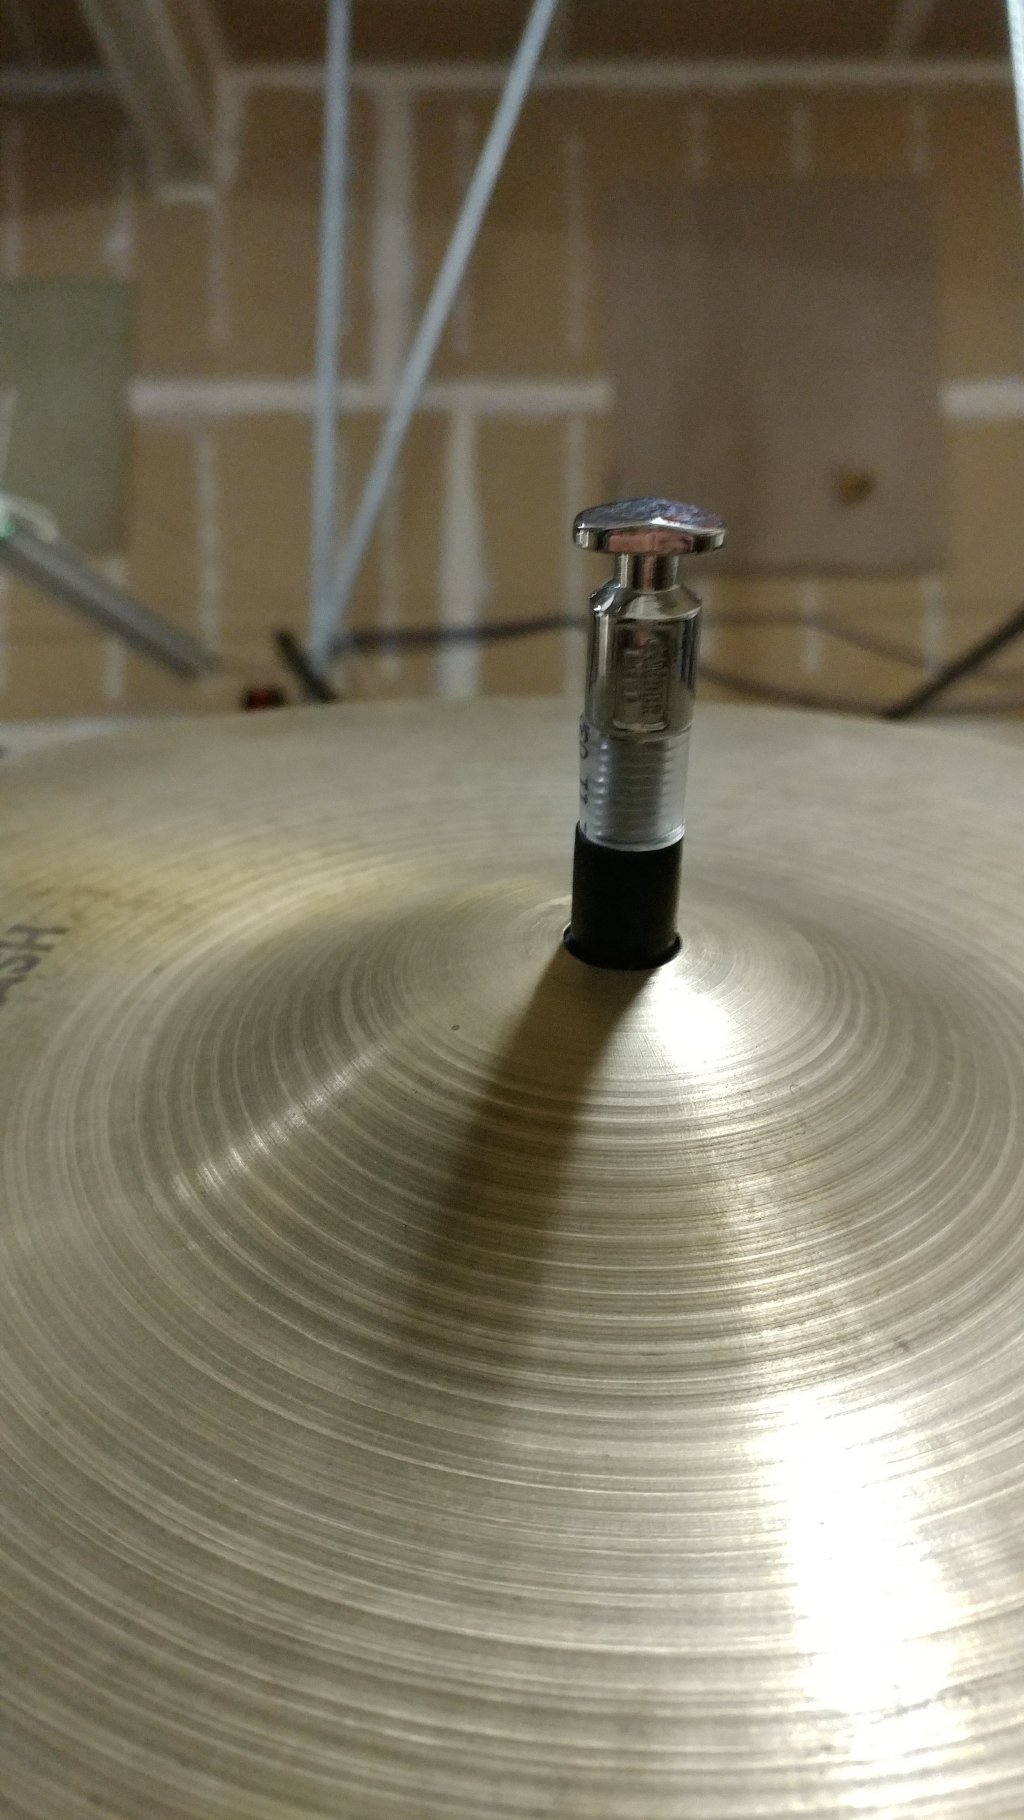 Cymbal on Tilter 3.jpg